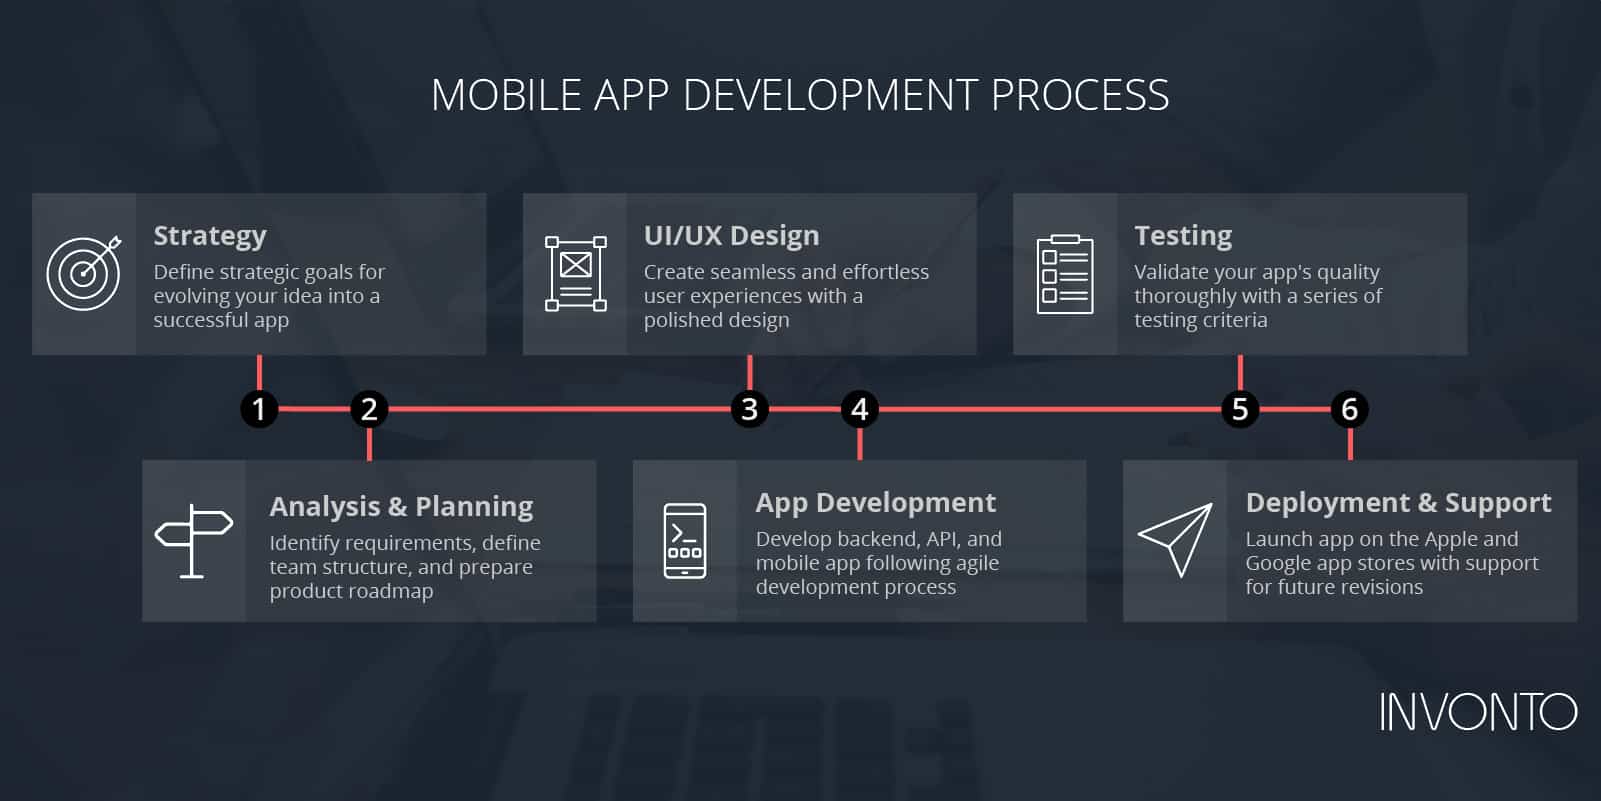 mobile app development process flow graphic, by Invonto